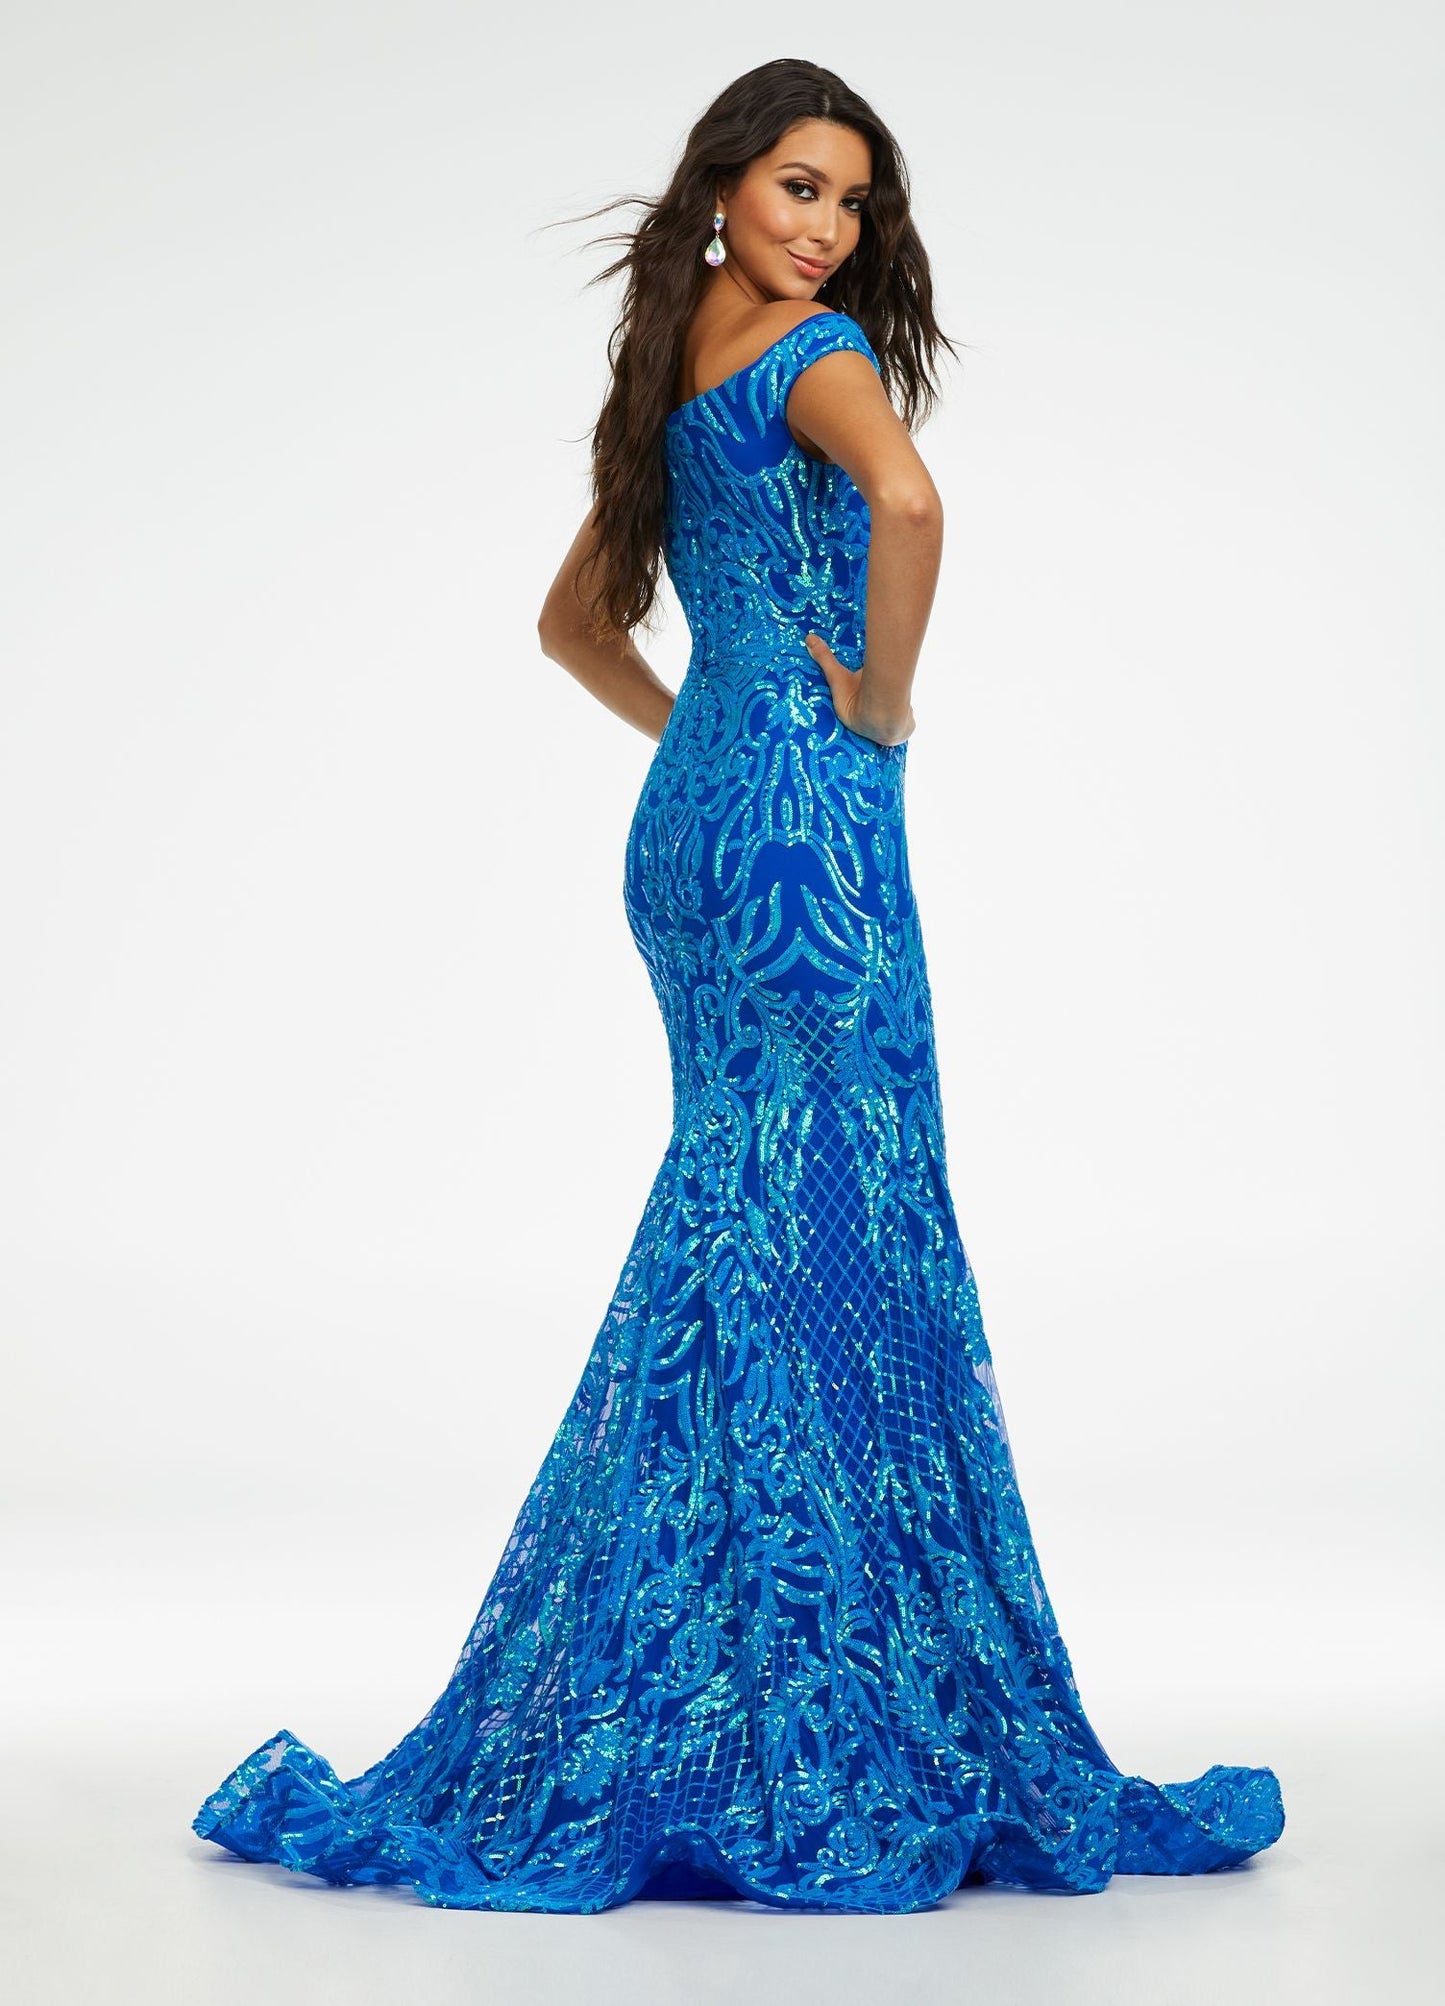 Ashley Lauren 11112 Size 8 Emerald Off the Shoulder Sequin Gown mermaid Prom Dress